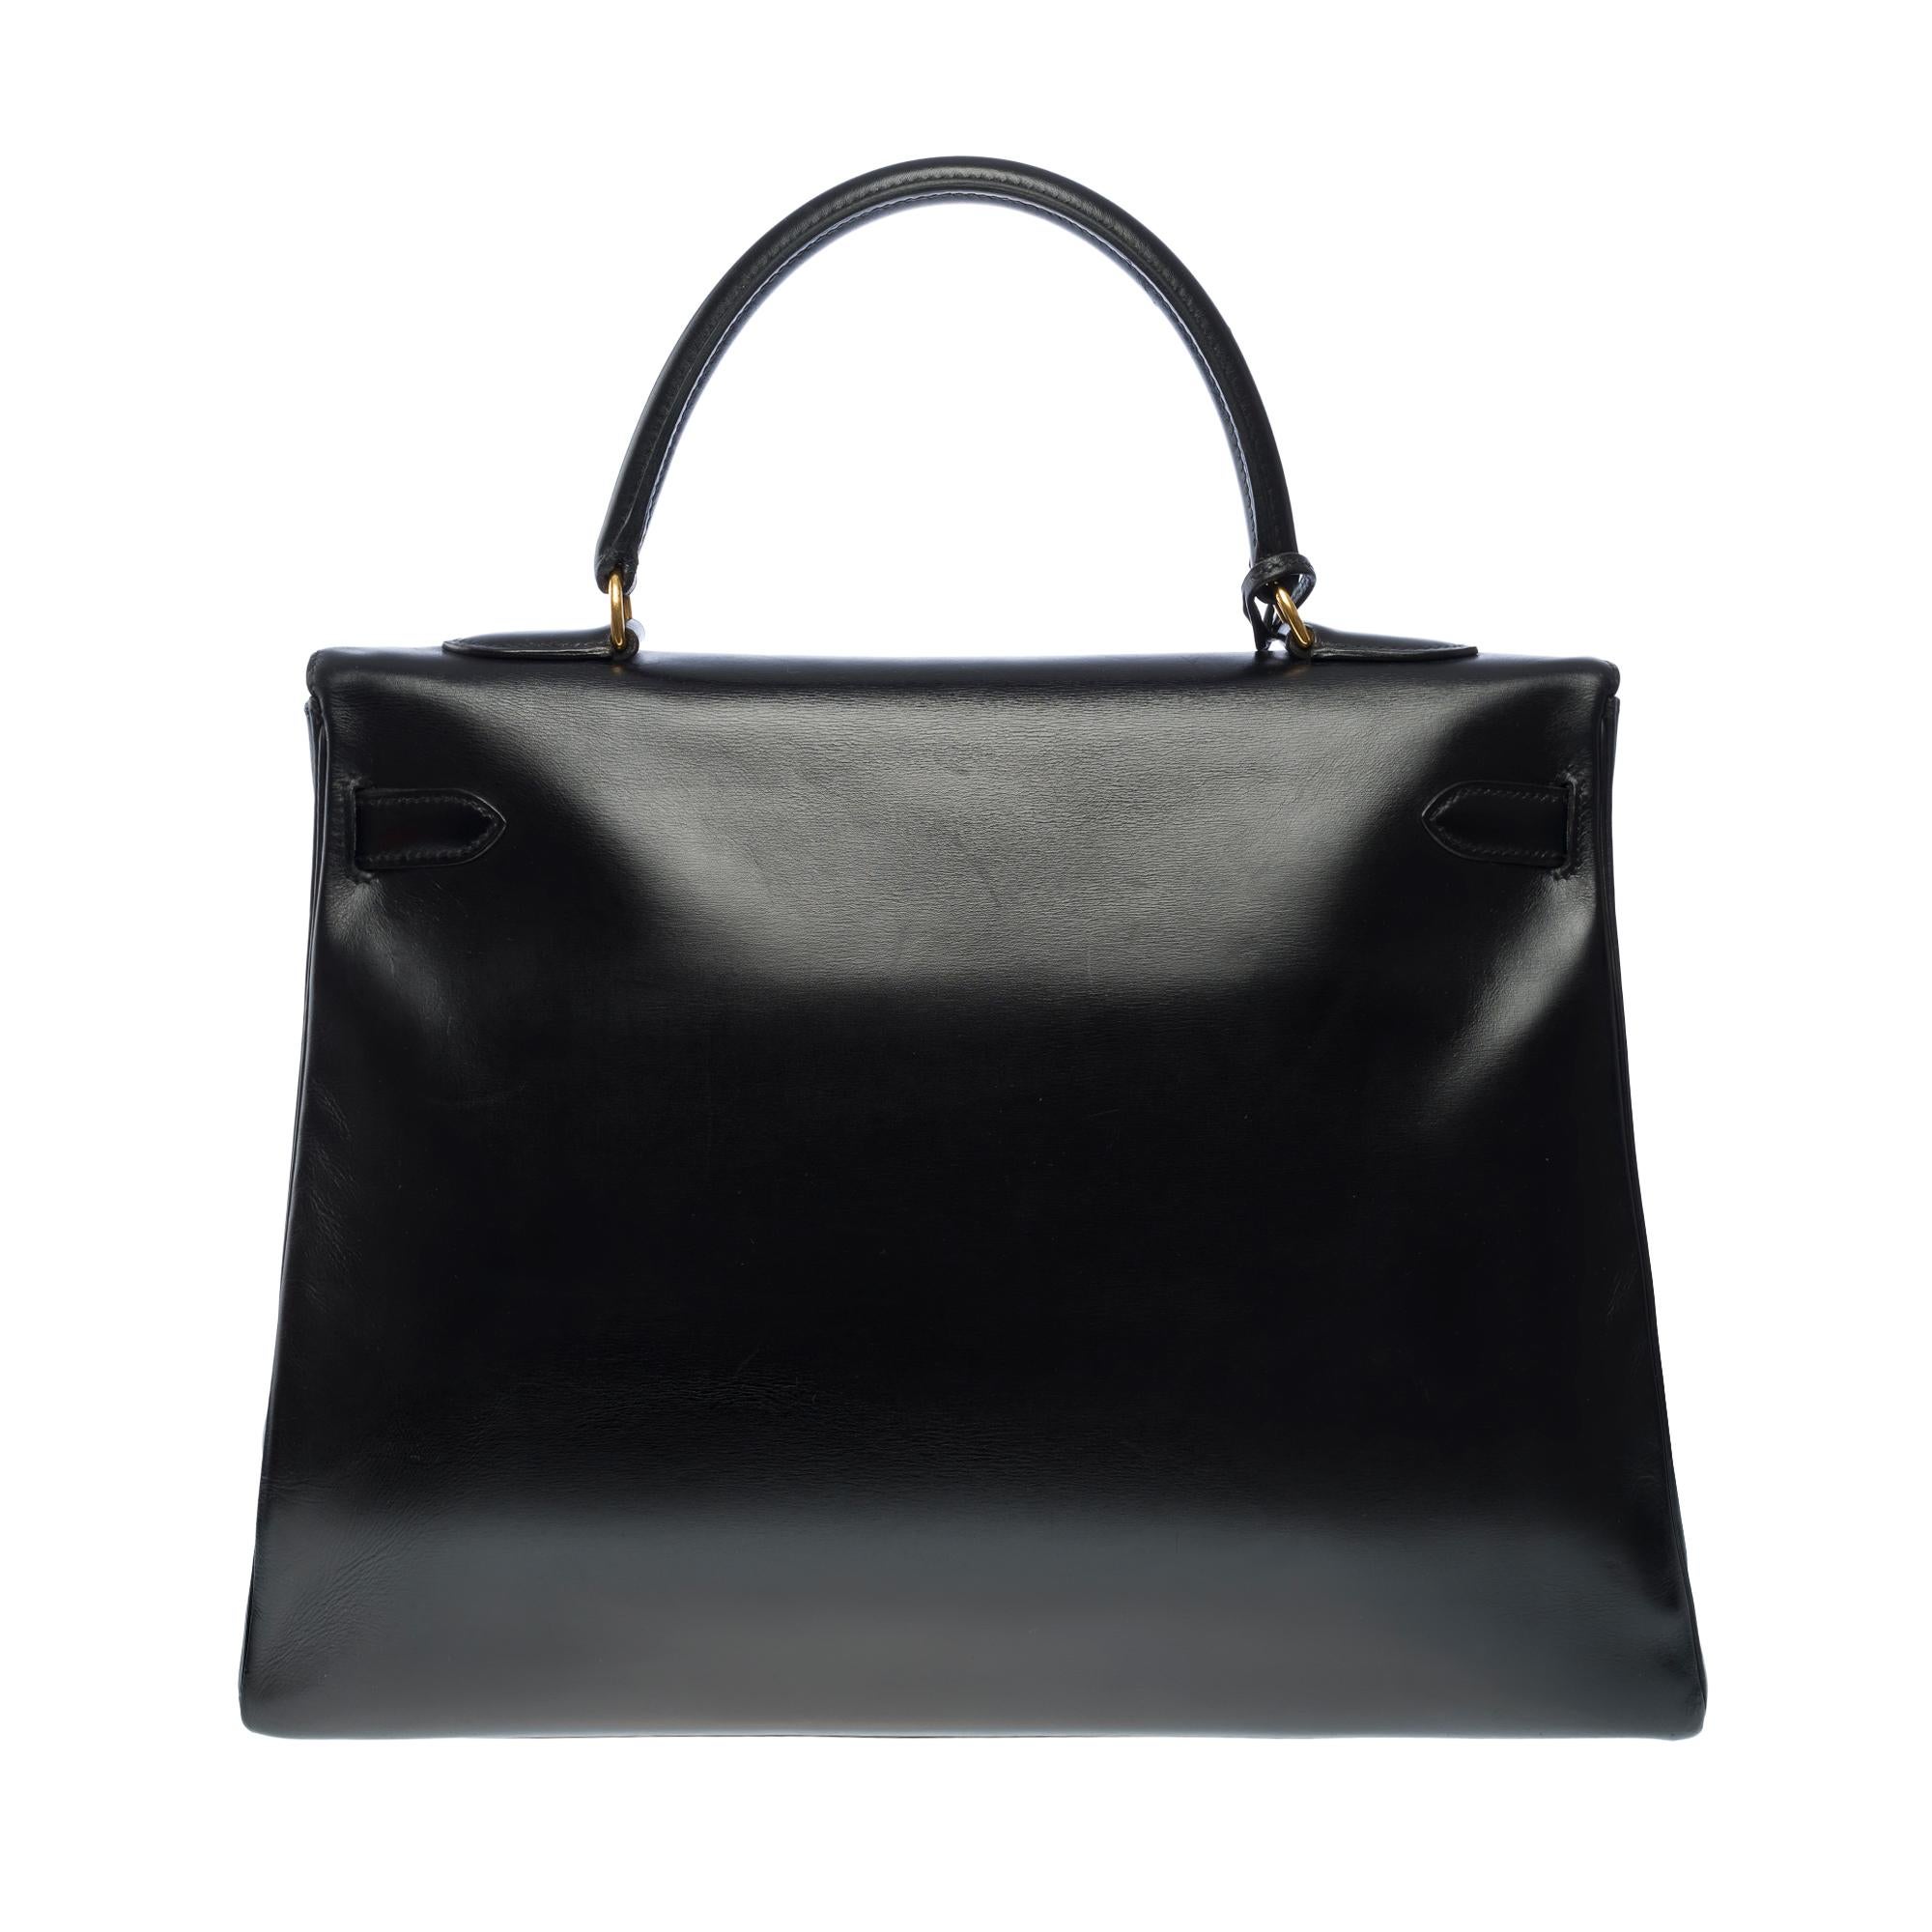 Hermès Kelly 35 retourne handbag strap in black box calfskin leather, GHW 1